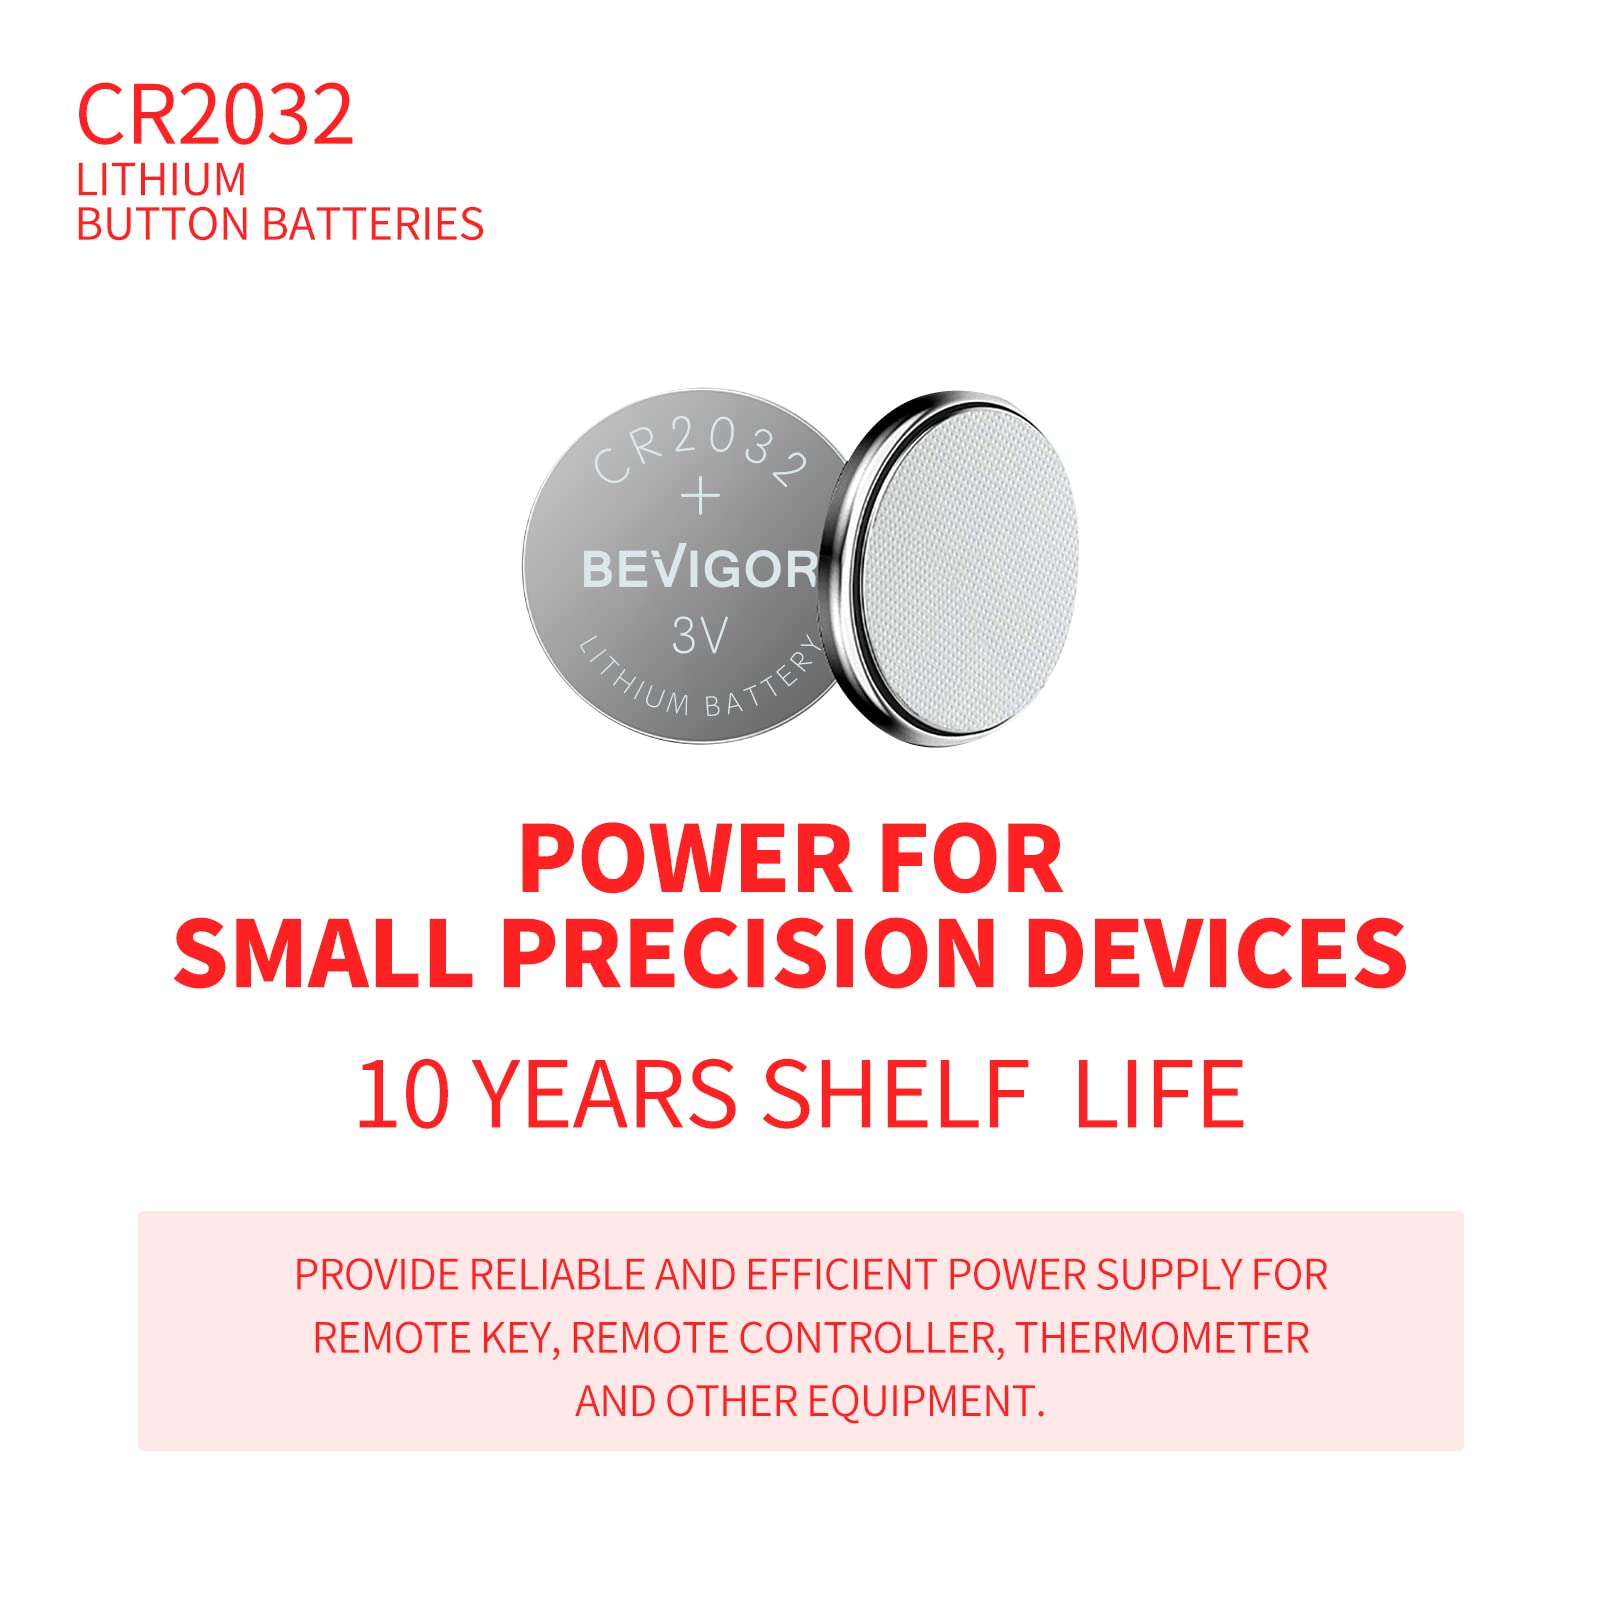 CR2032 lithium button batteries